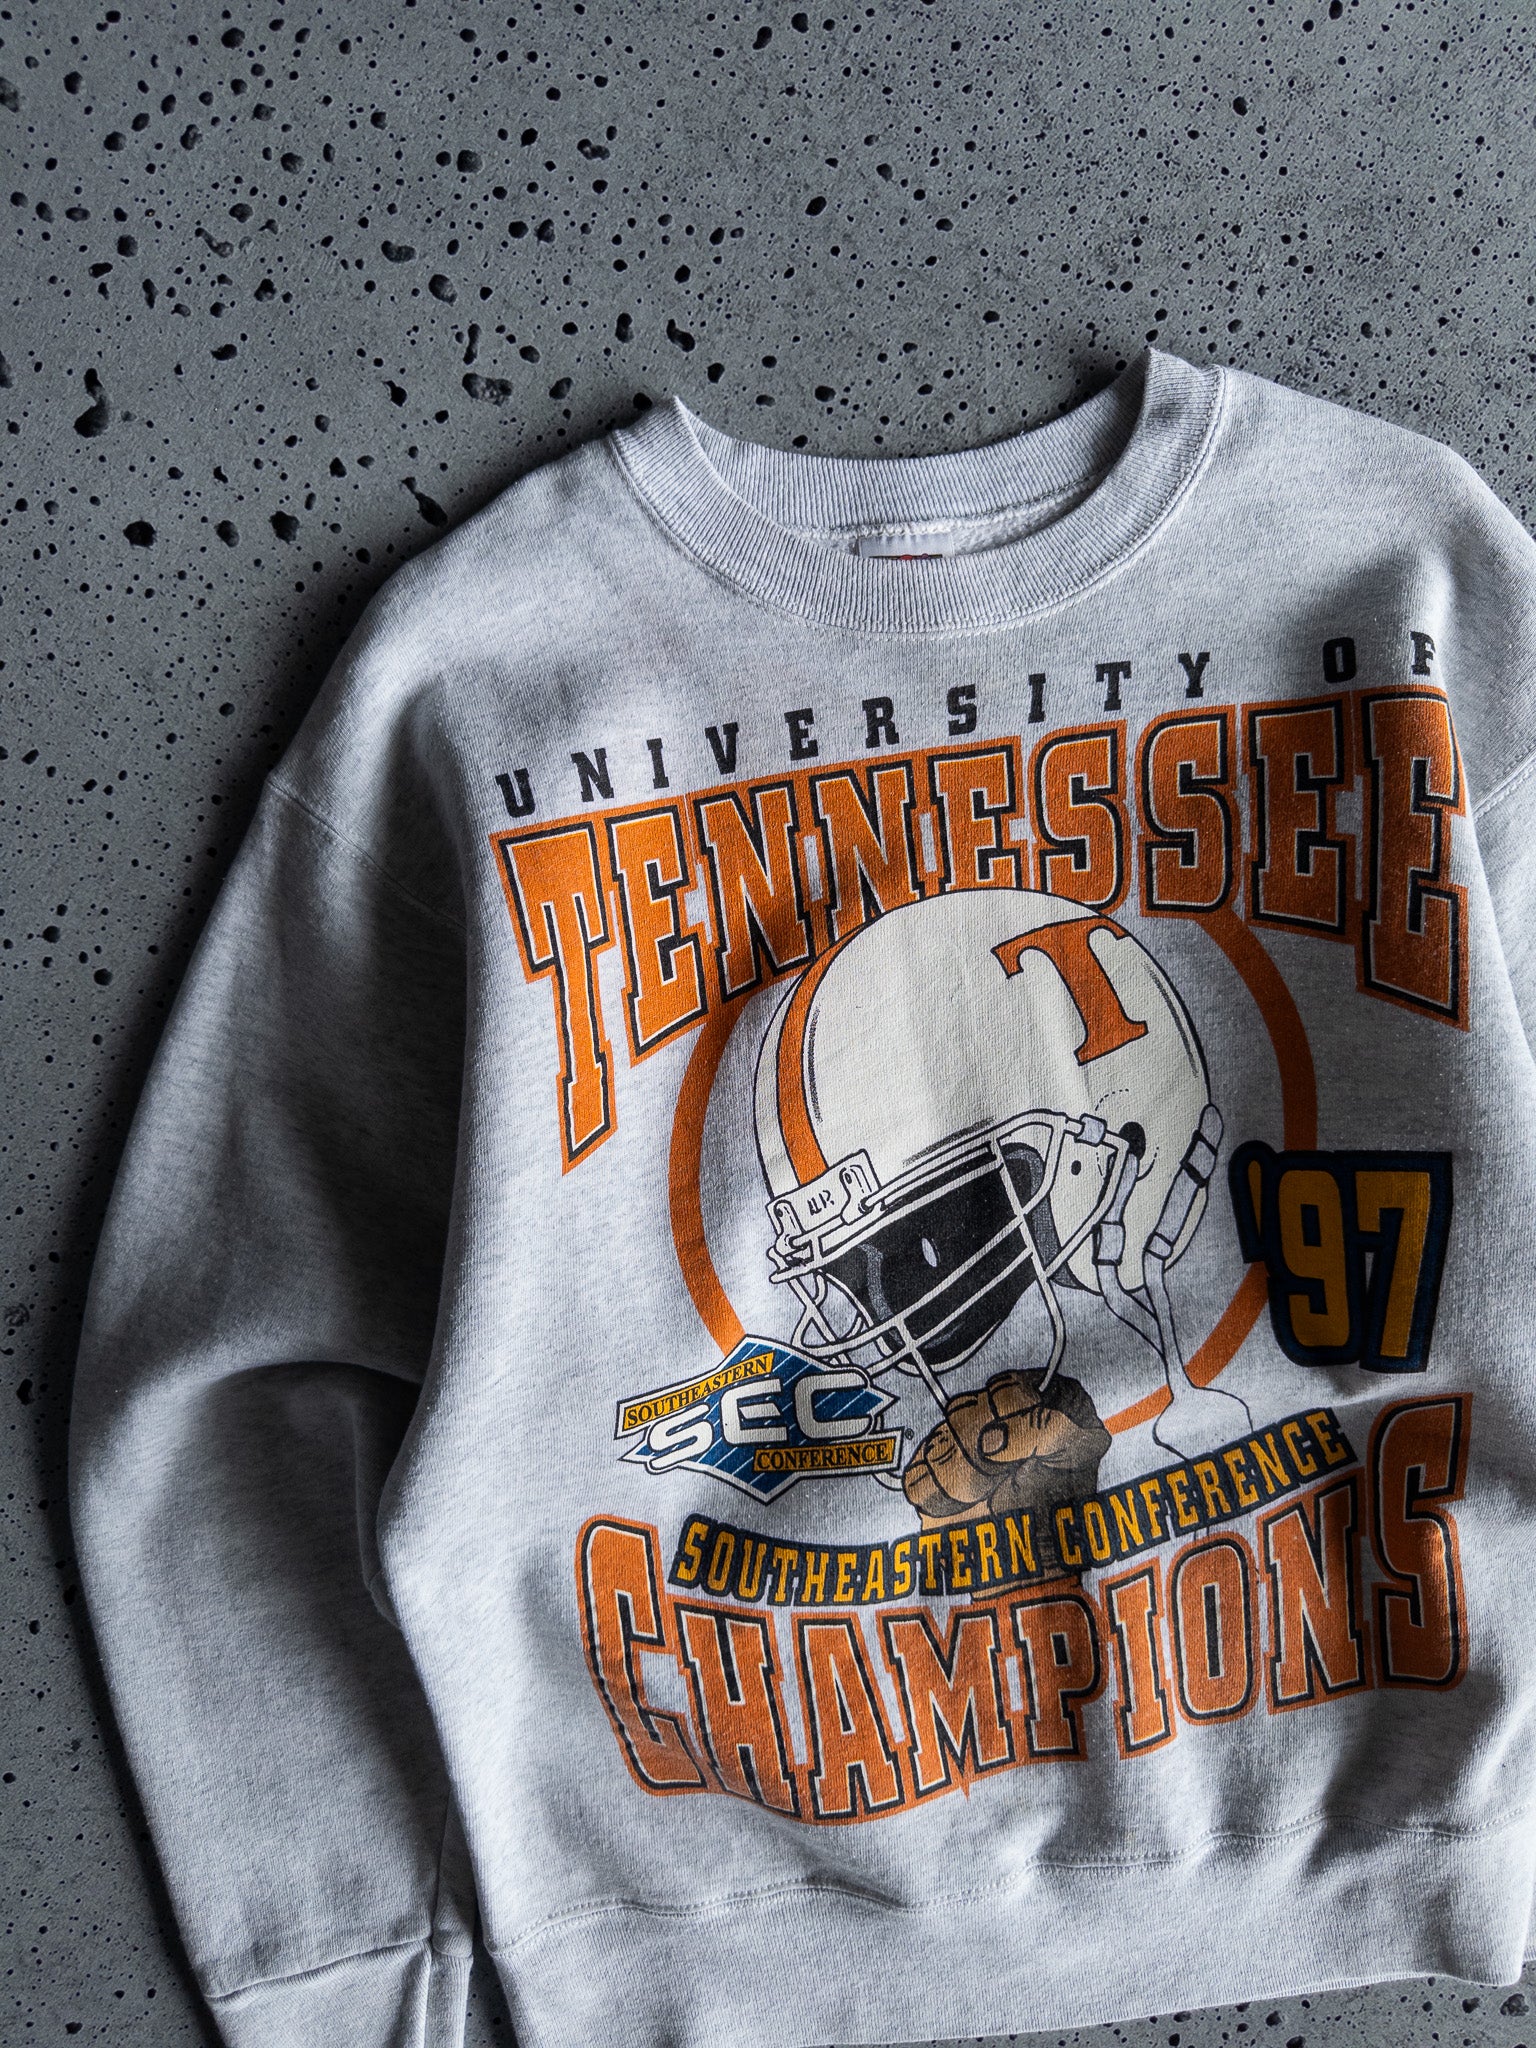 Vintage University of Tennessee 1997 Champions Sweatshirt (M)